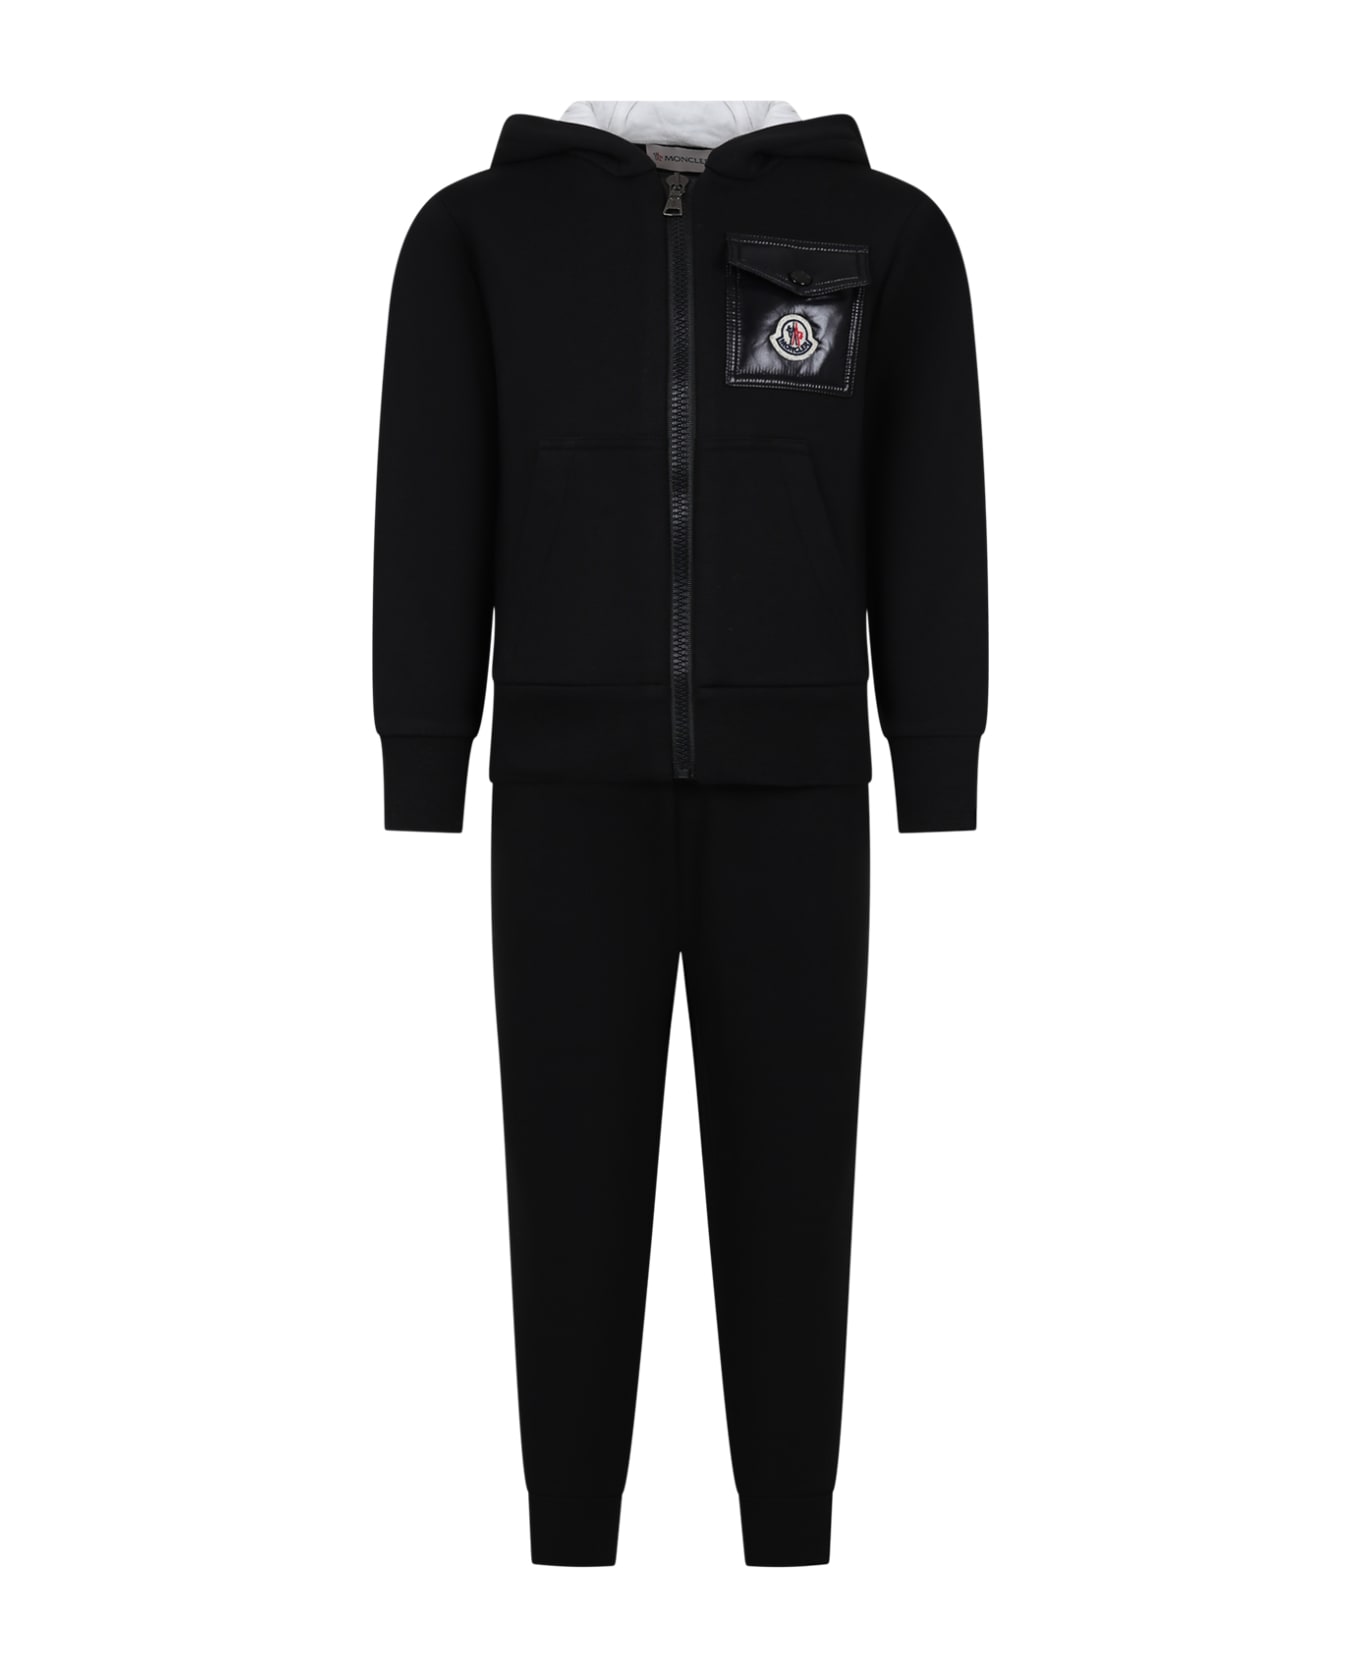 Moncler Black Set For Boy With Logo - Black ボトムス